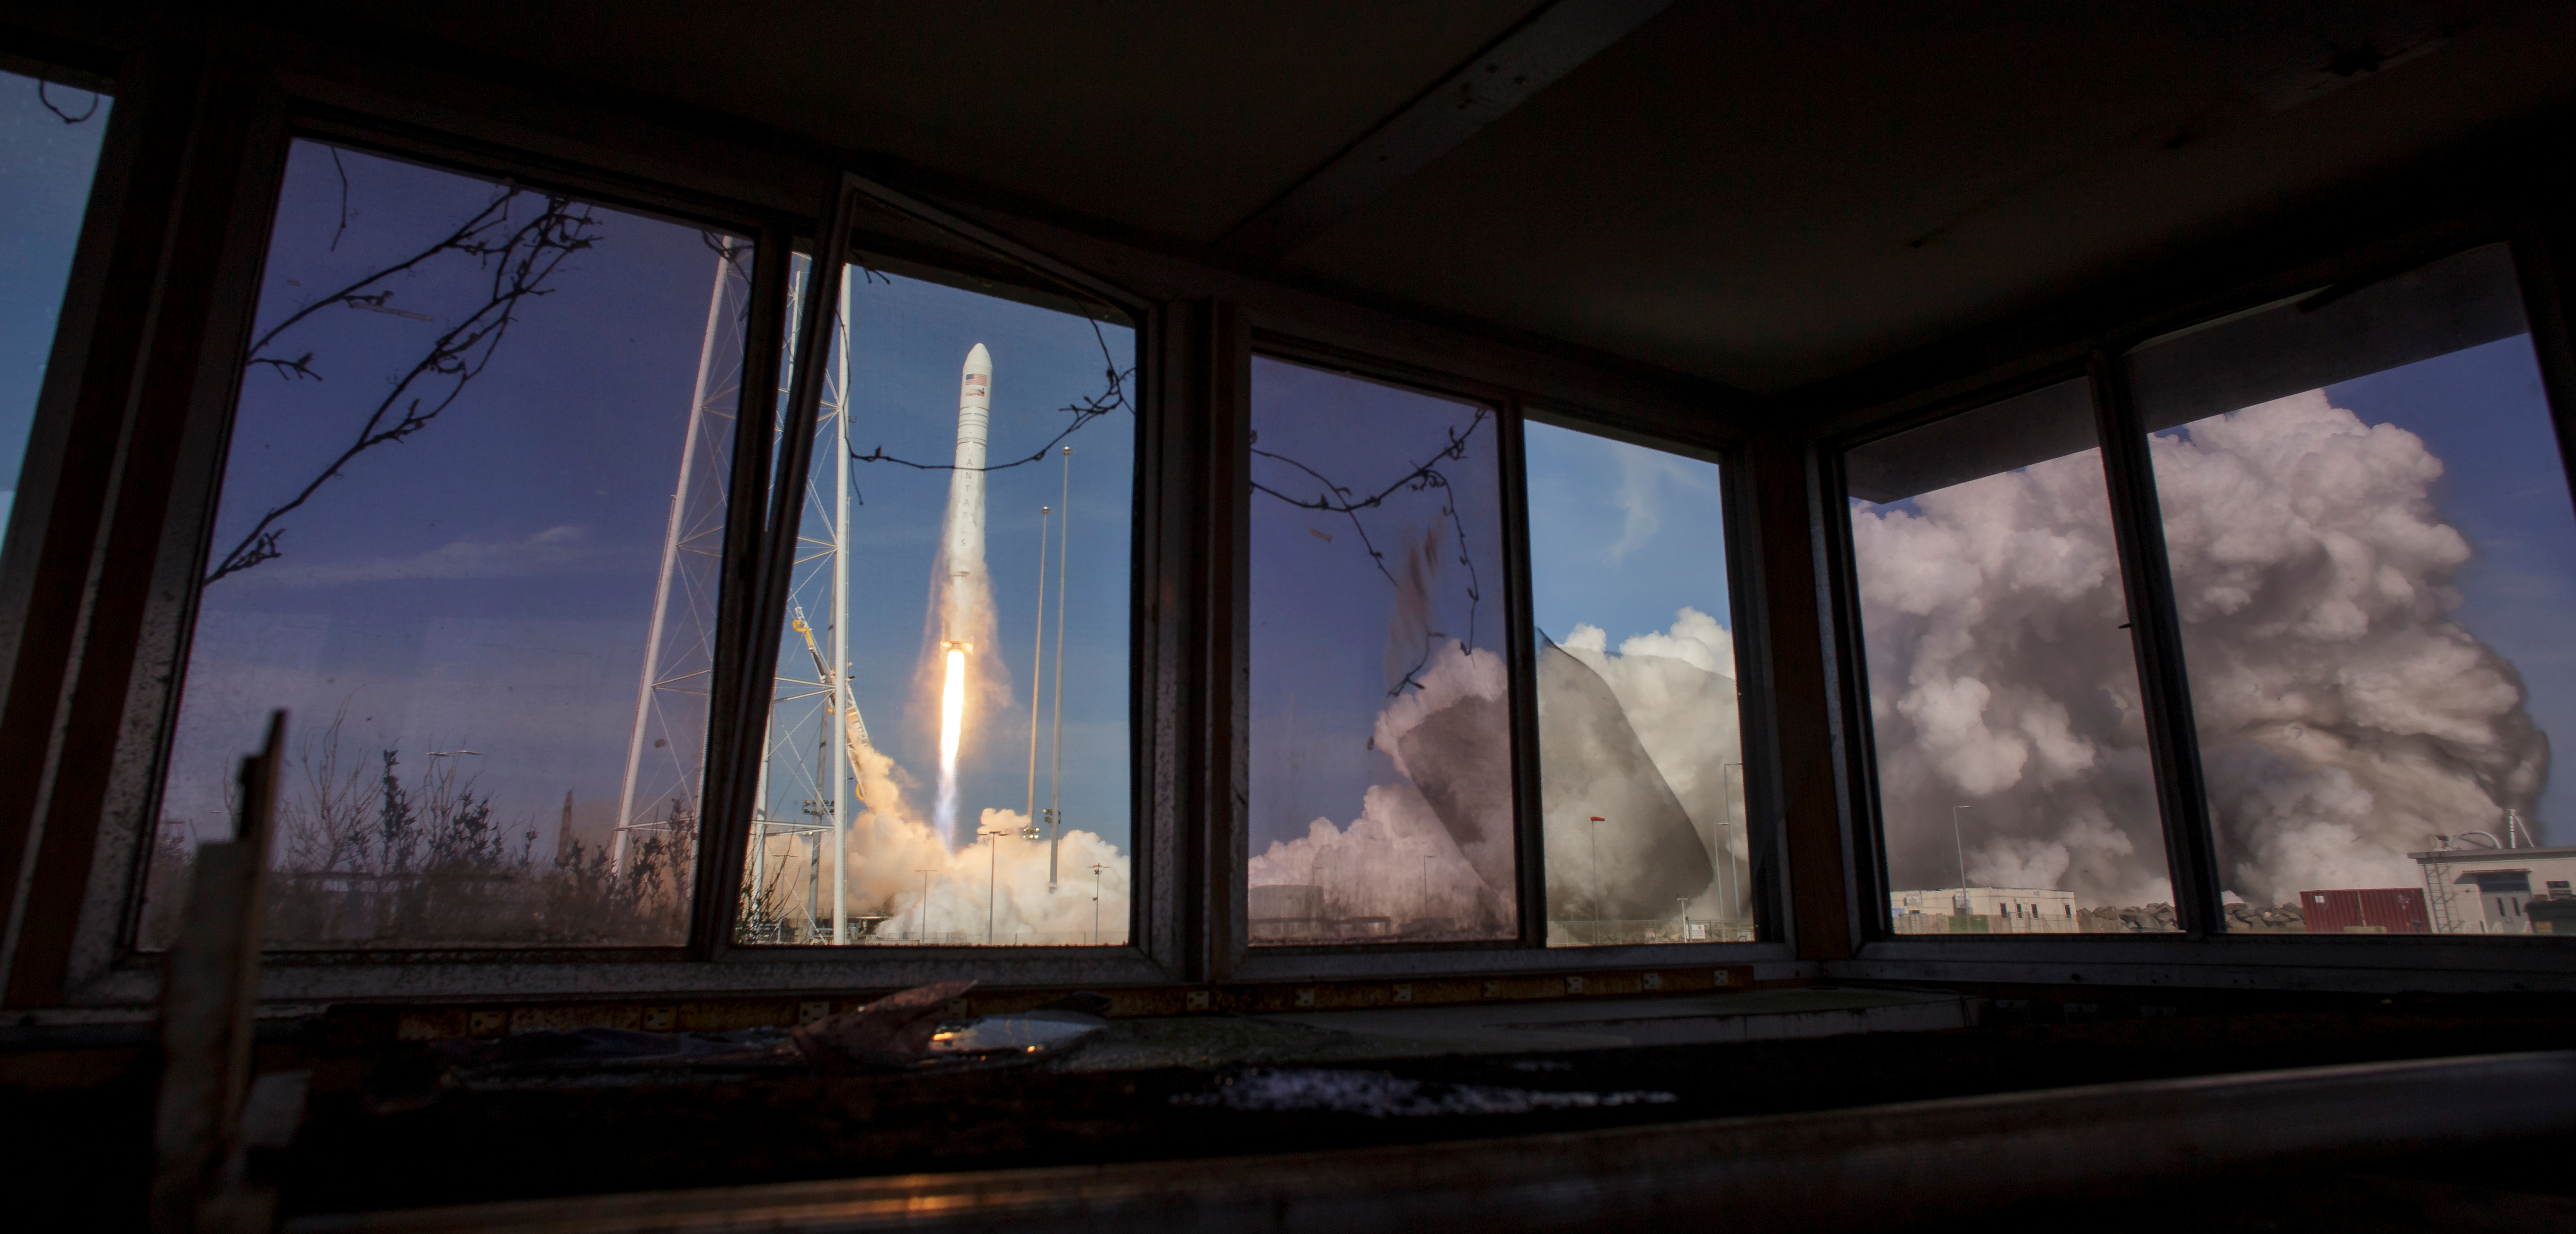 The Northrop Grumman Antares rocket with Cygnus resupply spacecraft onboard launches from NASA's Wallops Flight Facility in Virginia